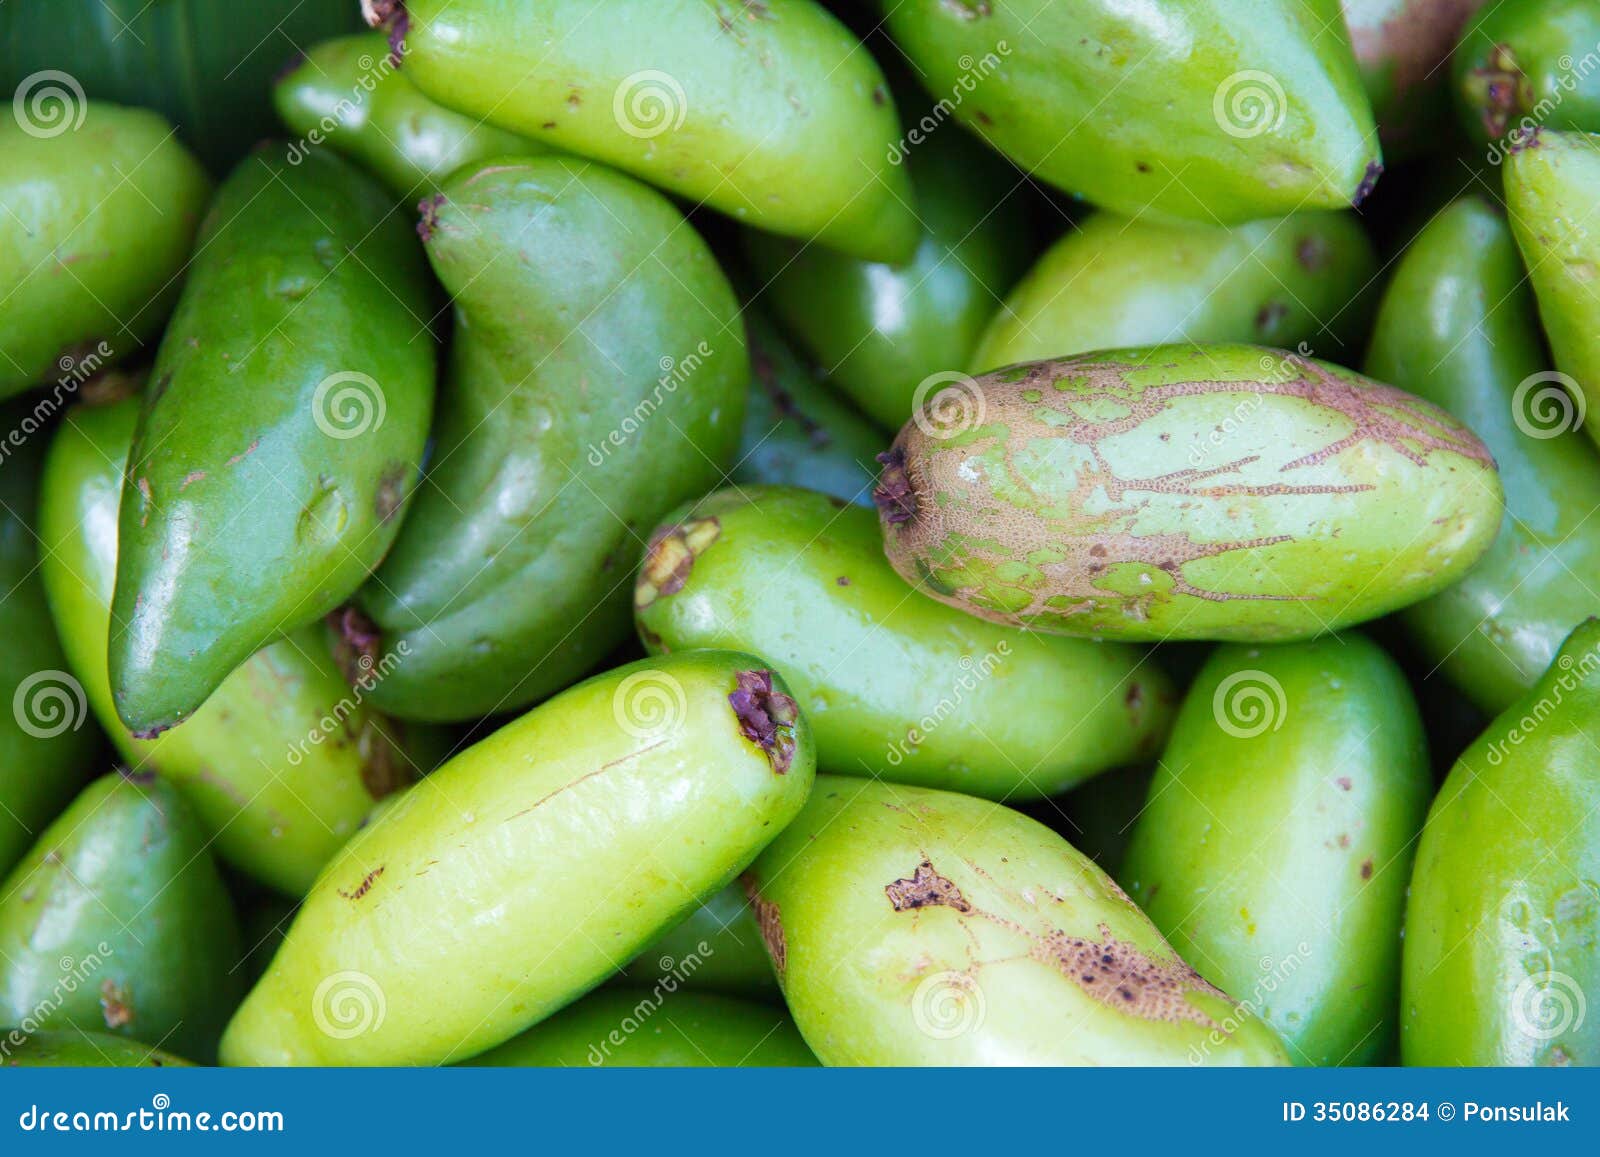 madan,tropical thai fruit stock images - image: 35086284